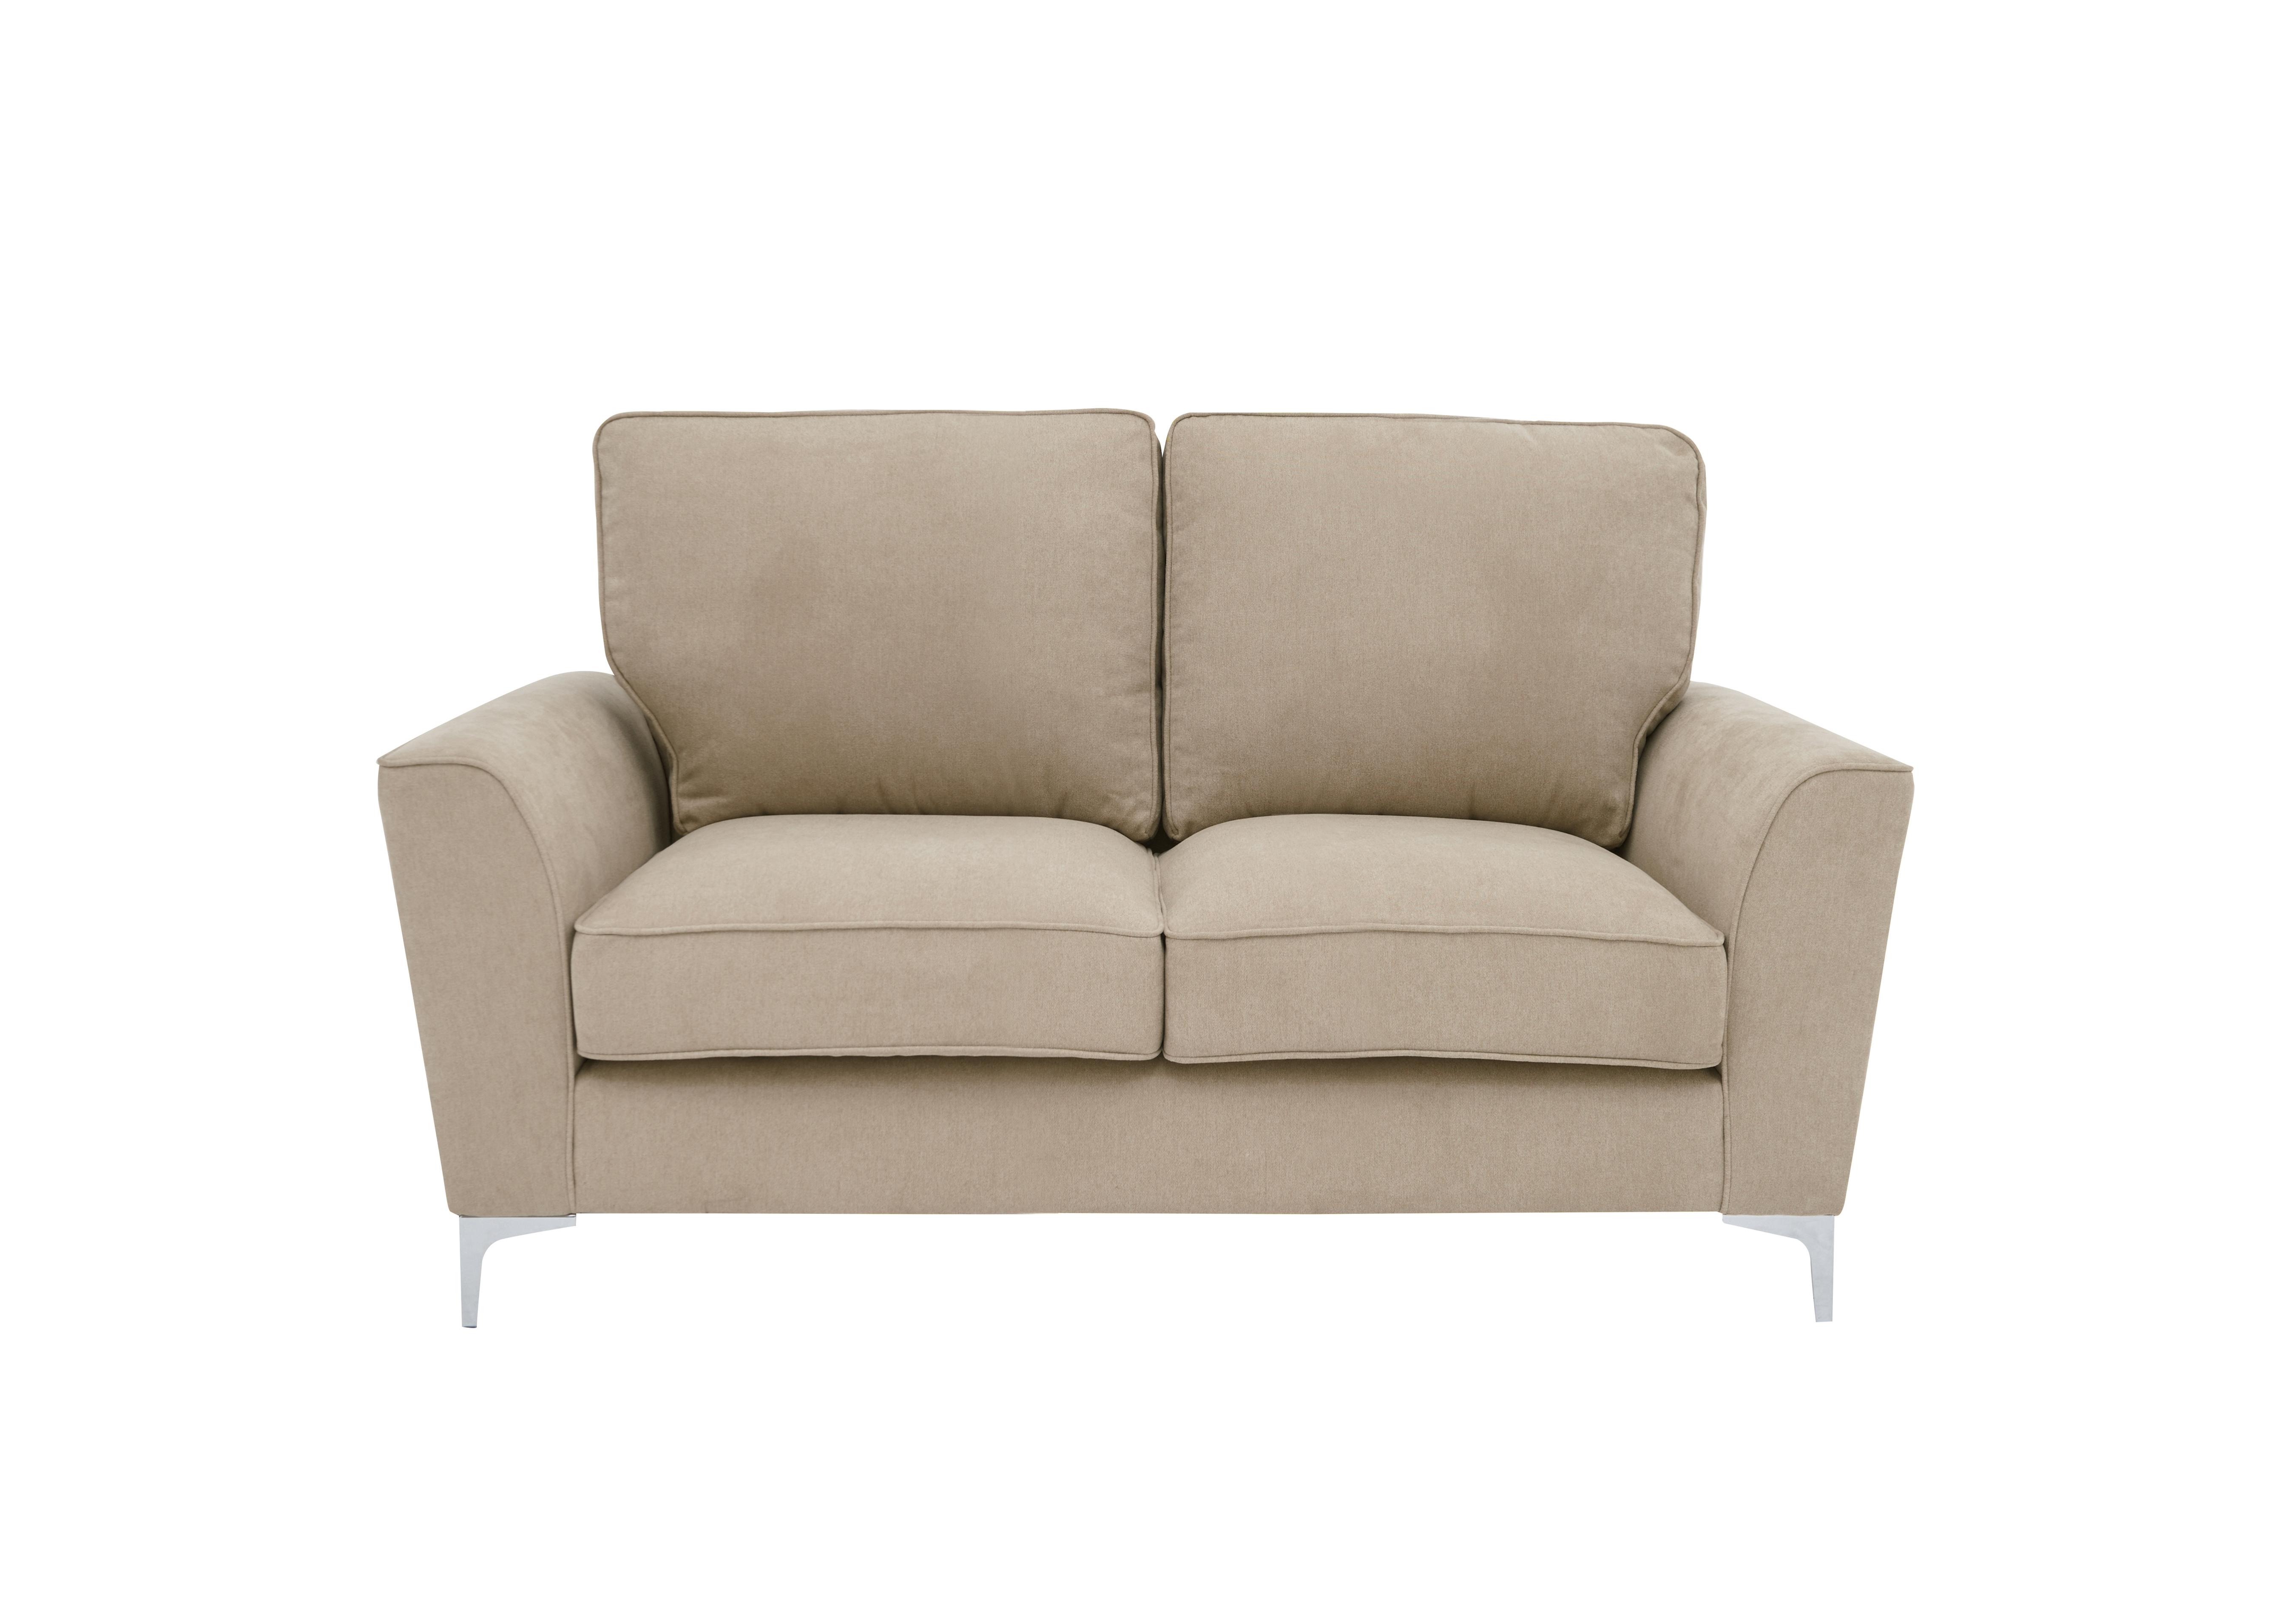 Legend 2 Seater Classic Back Fabric Sofa in Kingston Beige on Furniture Village